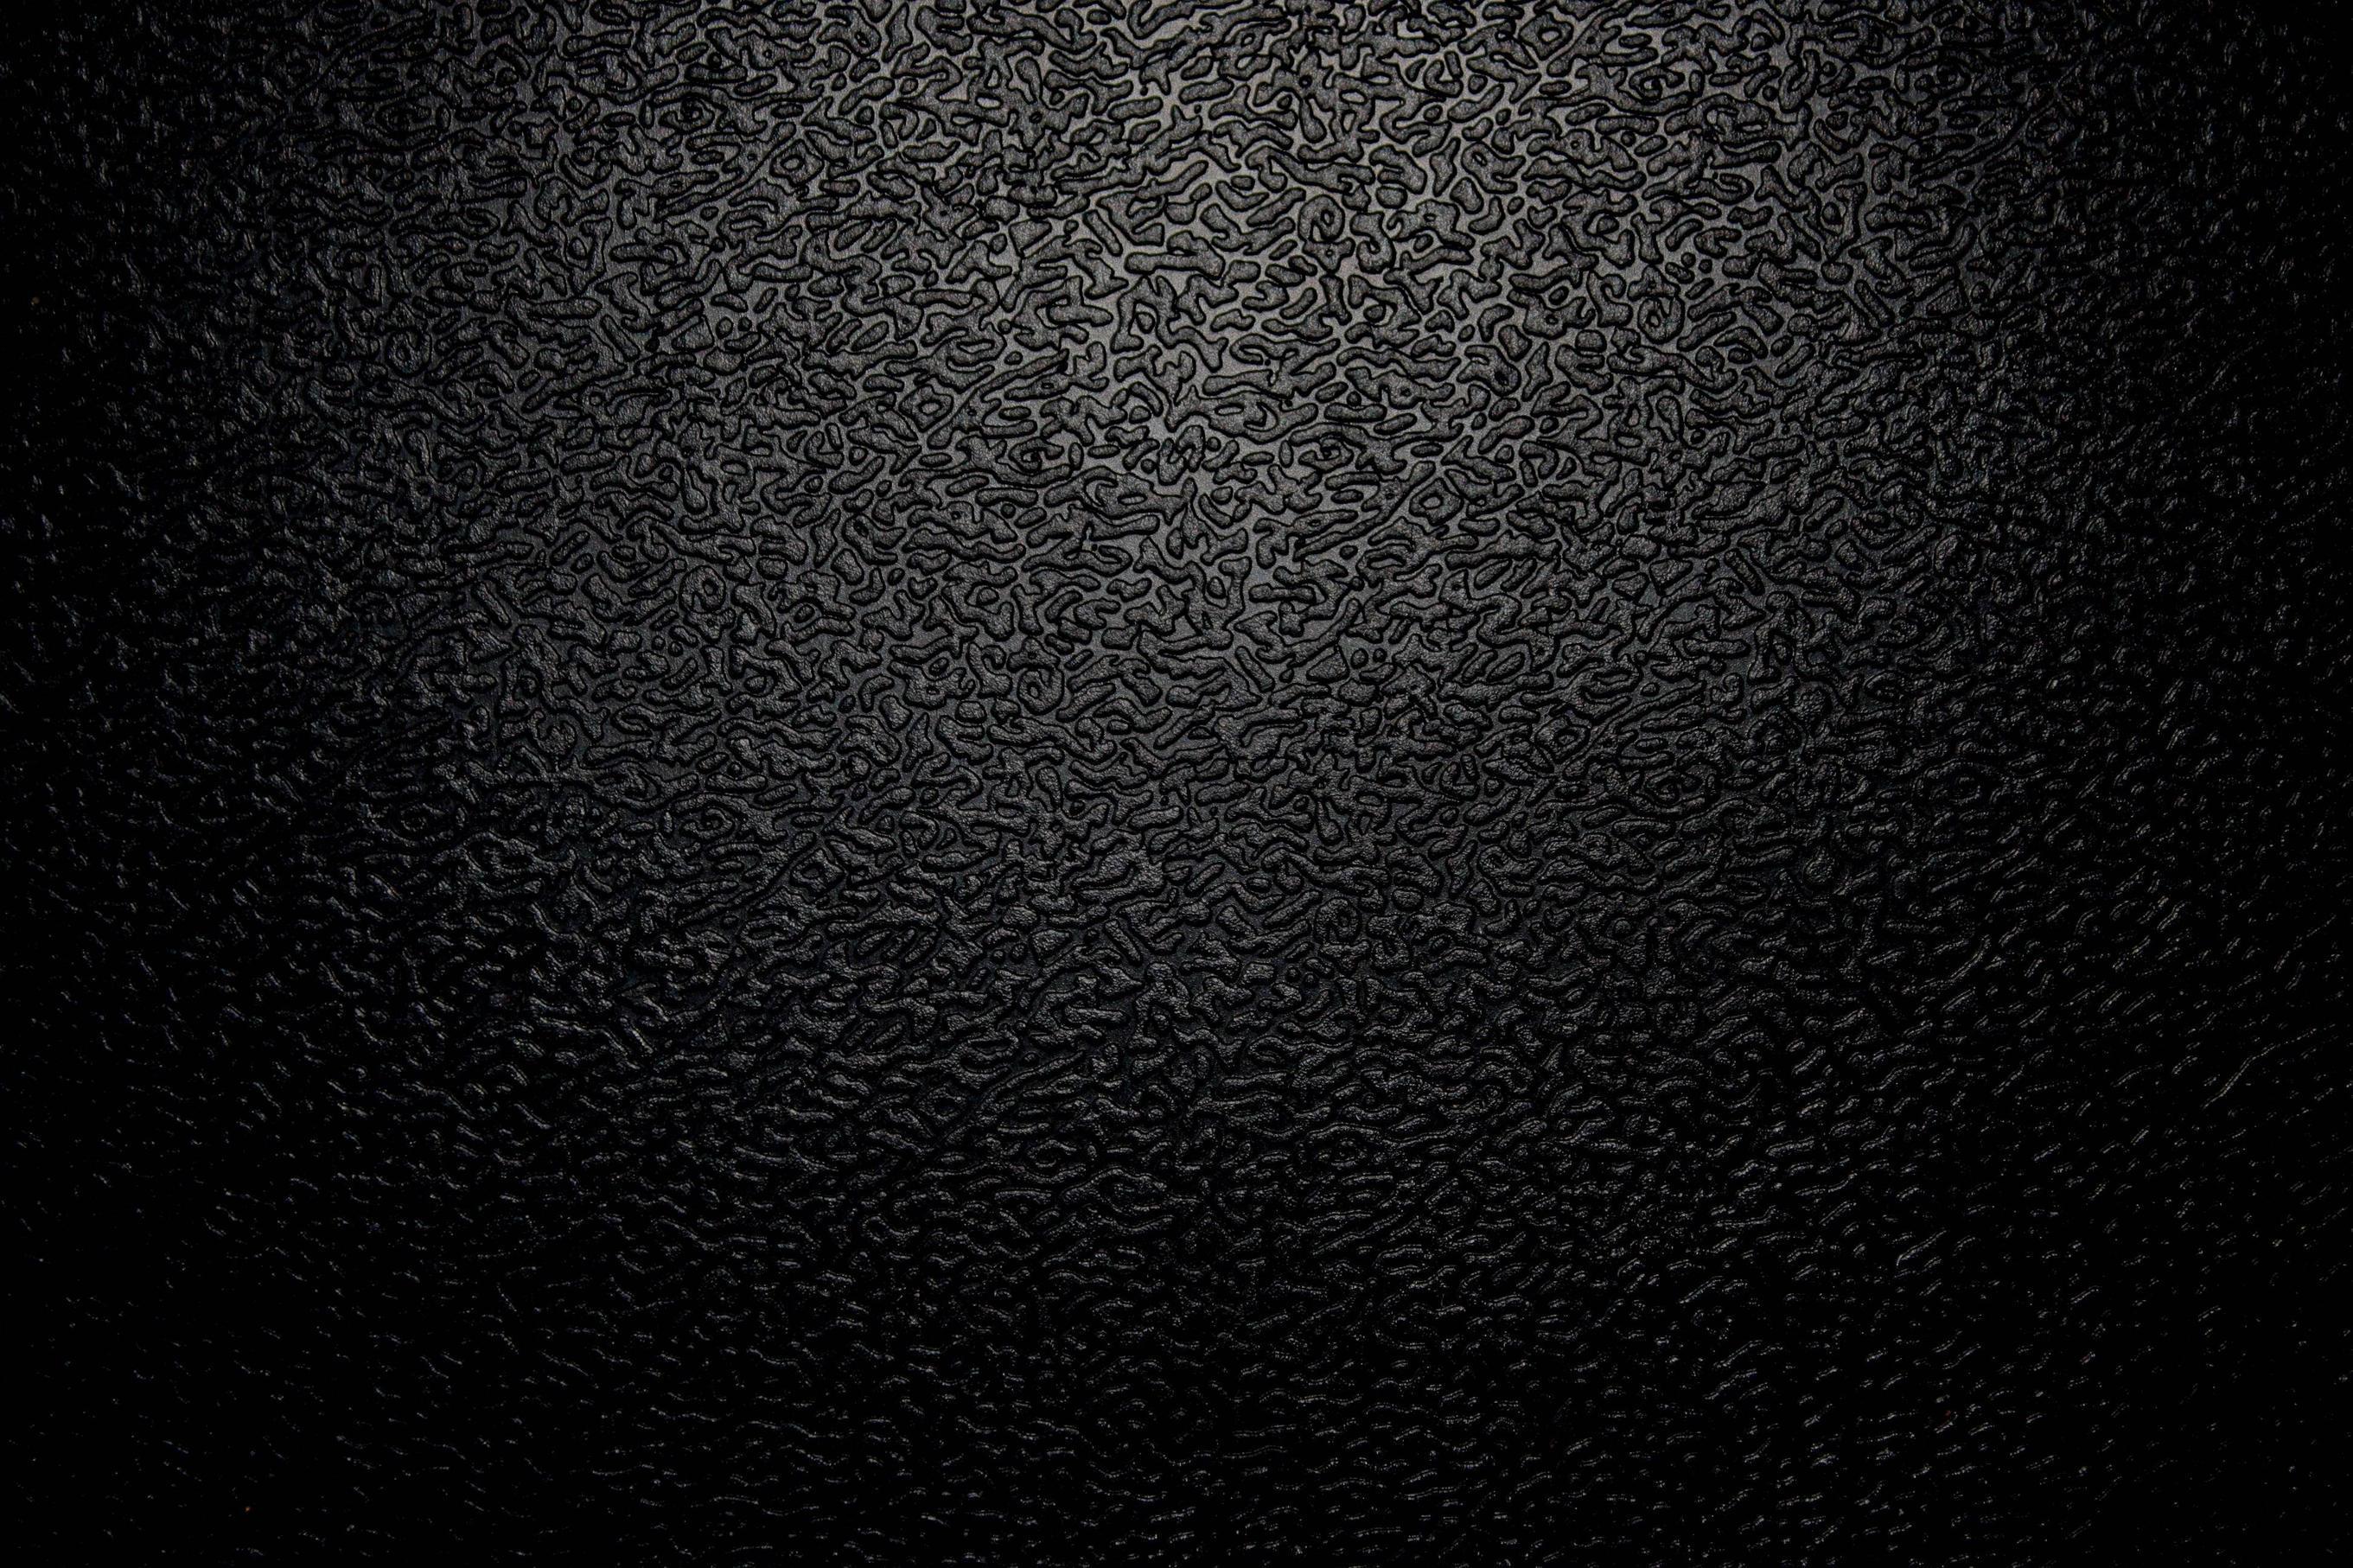 Texture Black Wallpaper Background : Background texture background black texture black